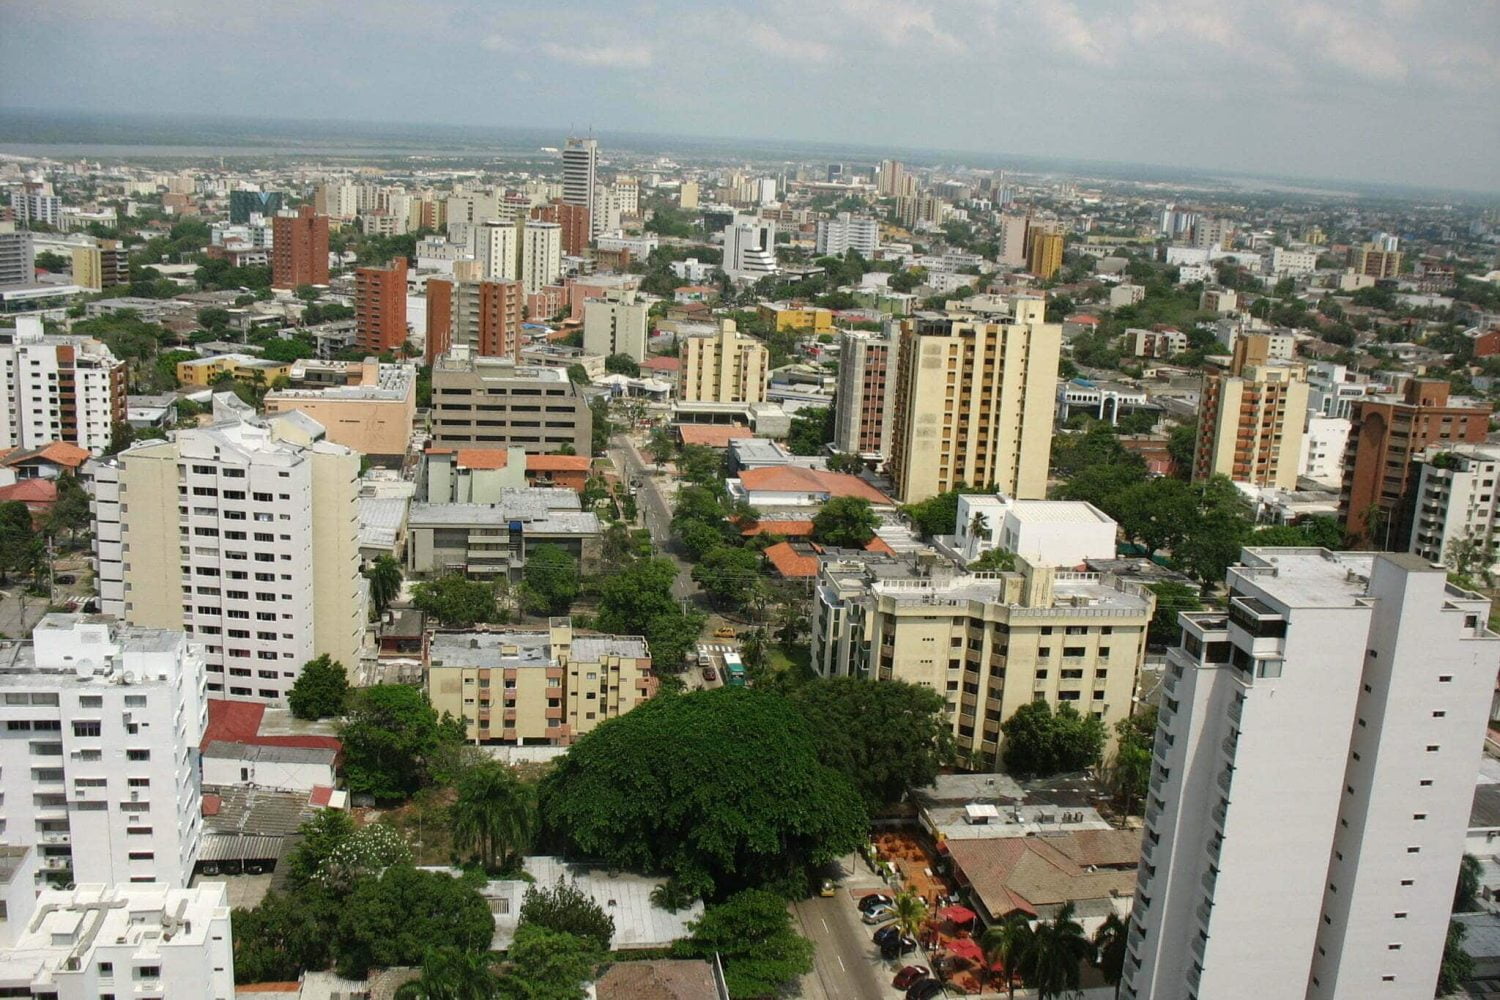 Oferta de empleo en Barranquilla